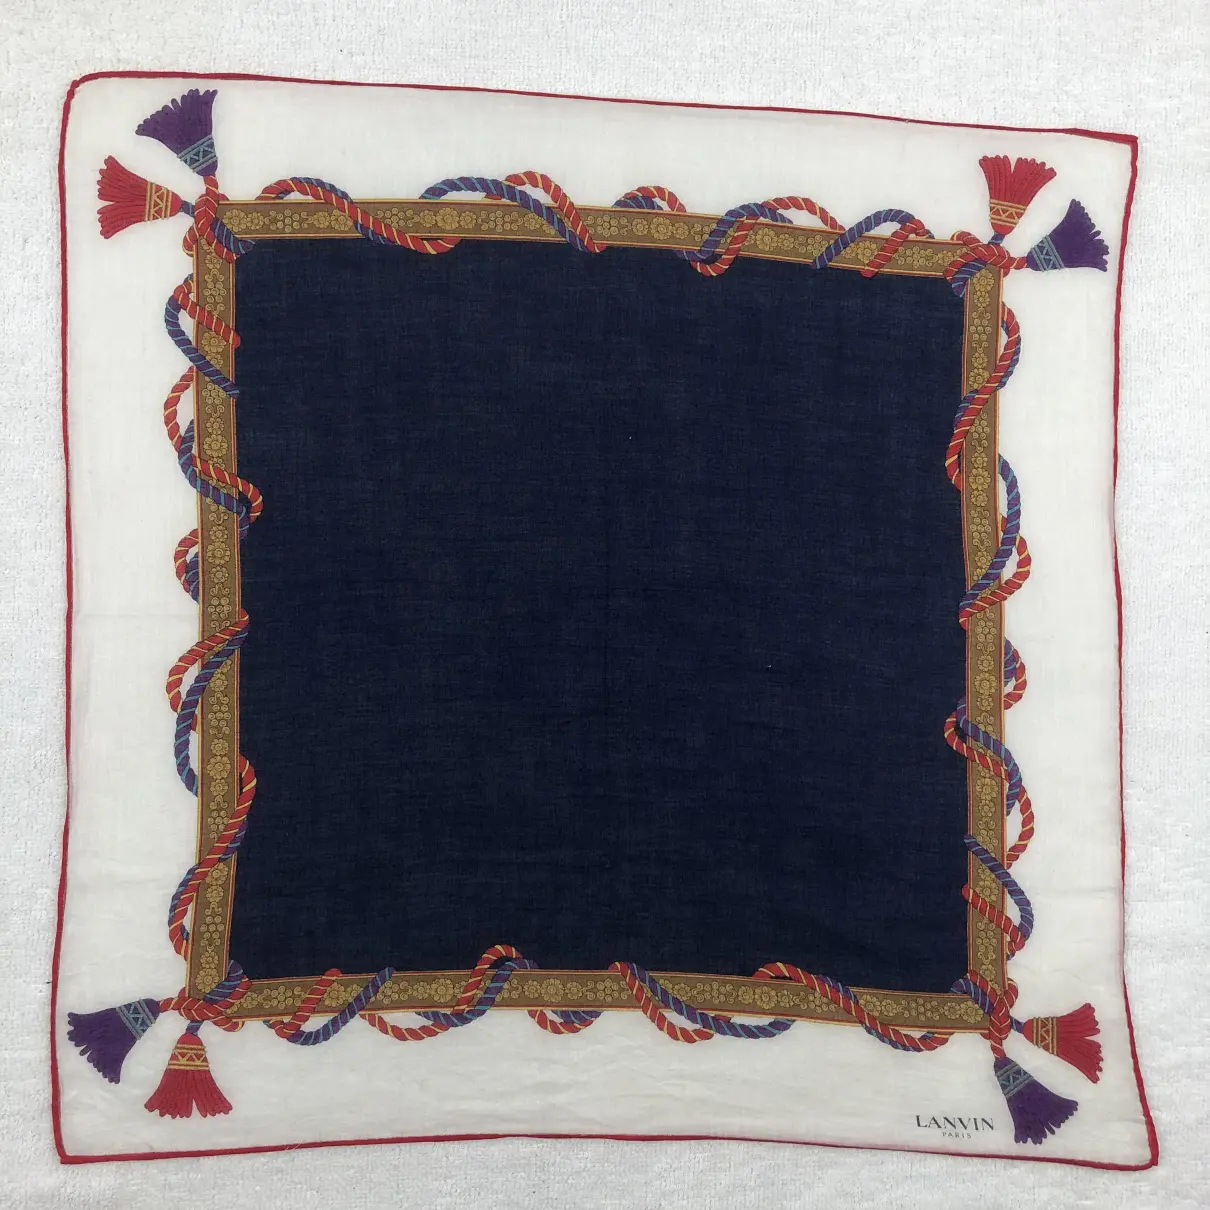 Buy Lanvin Silk handkerchief online